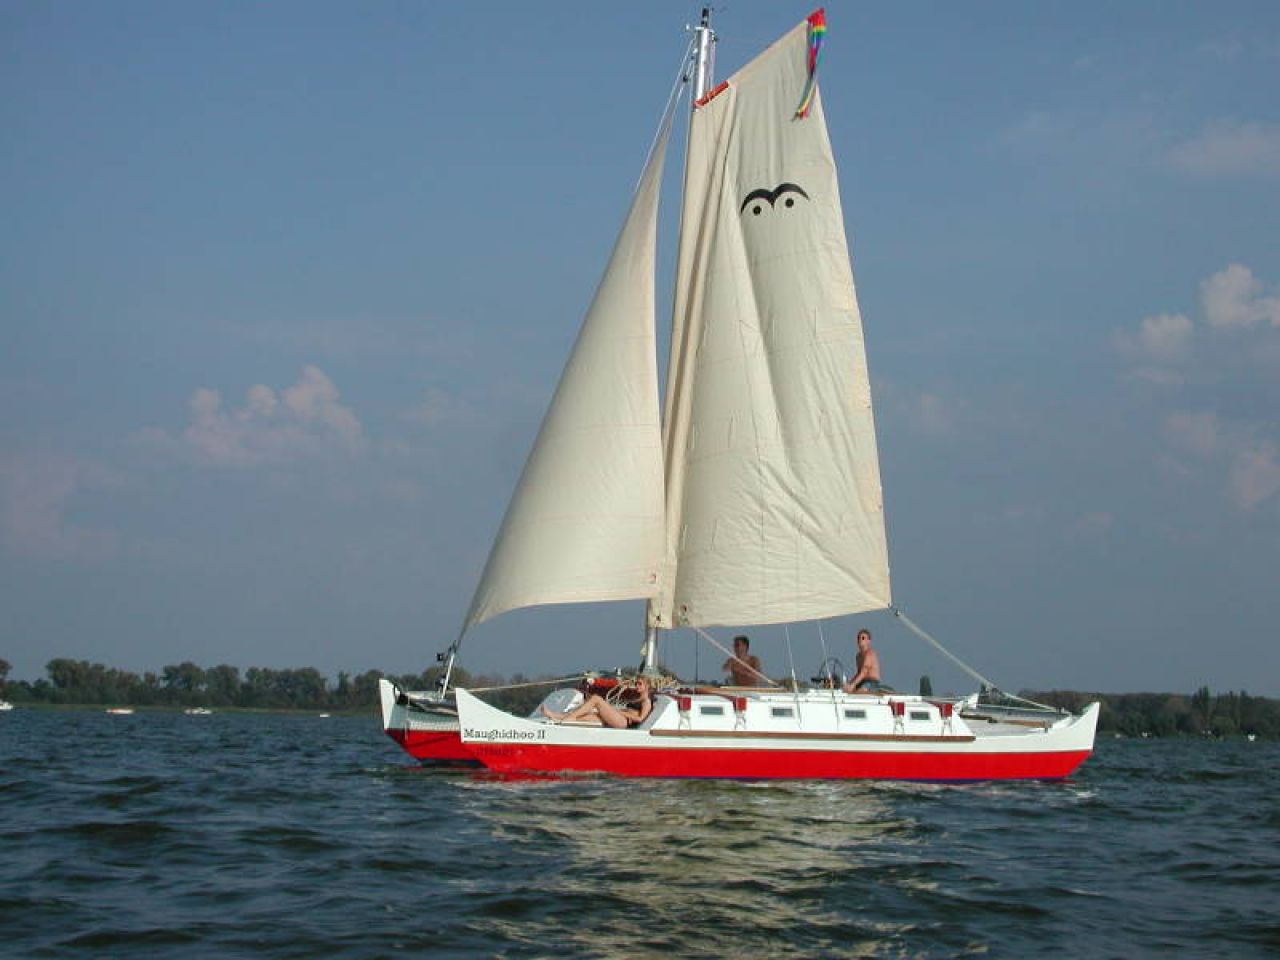 Red and white catamaran sailing